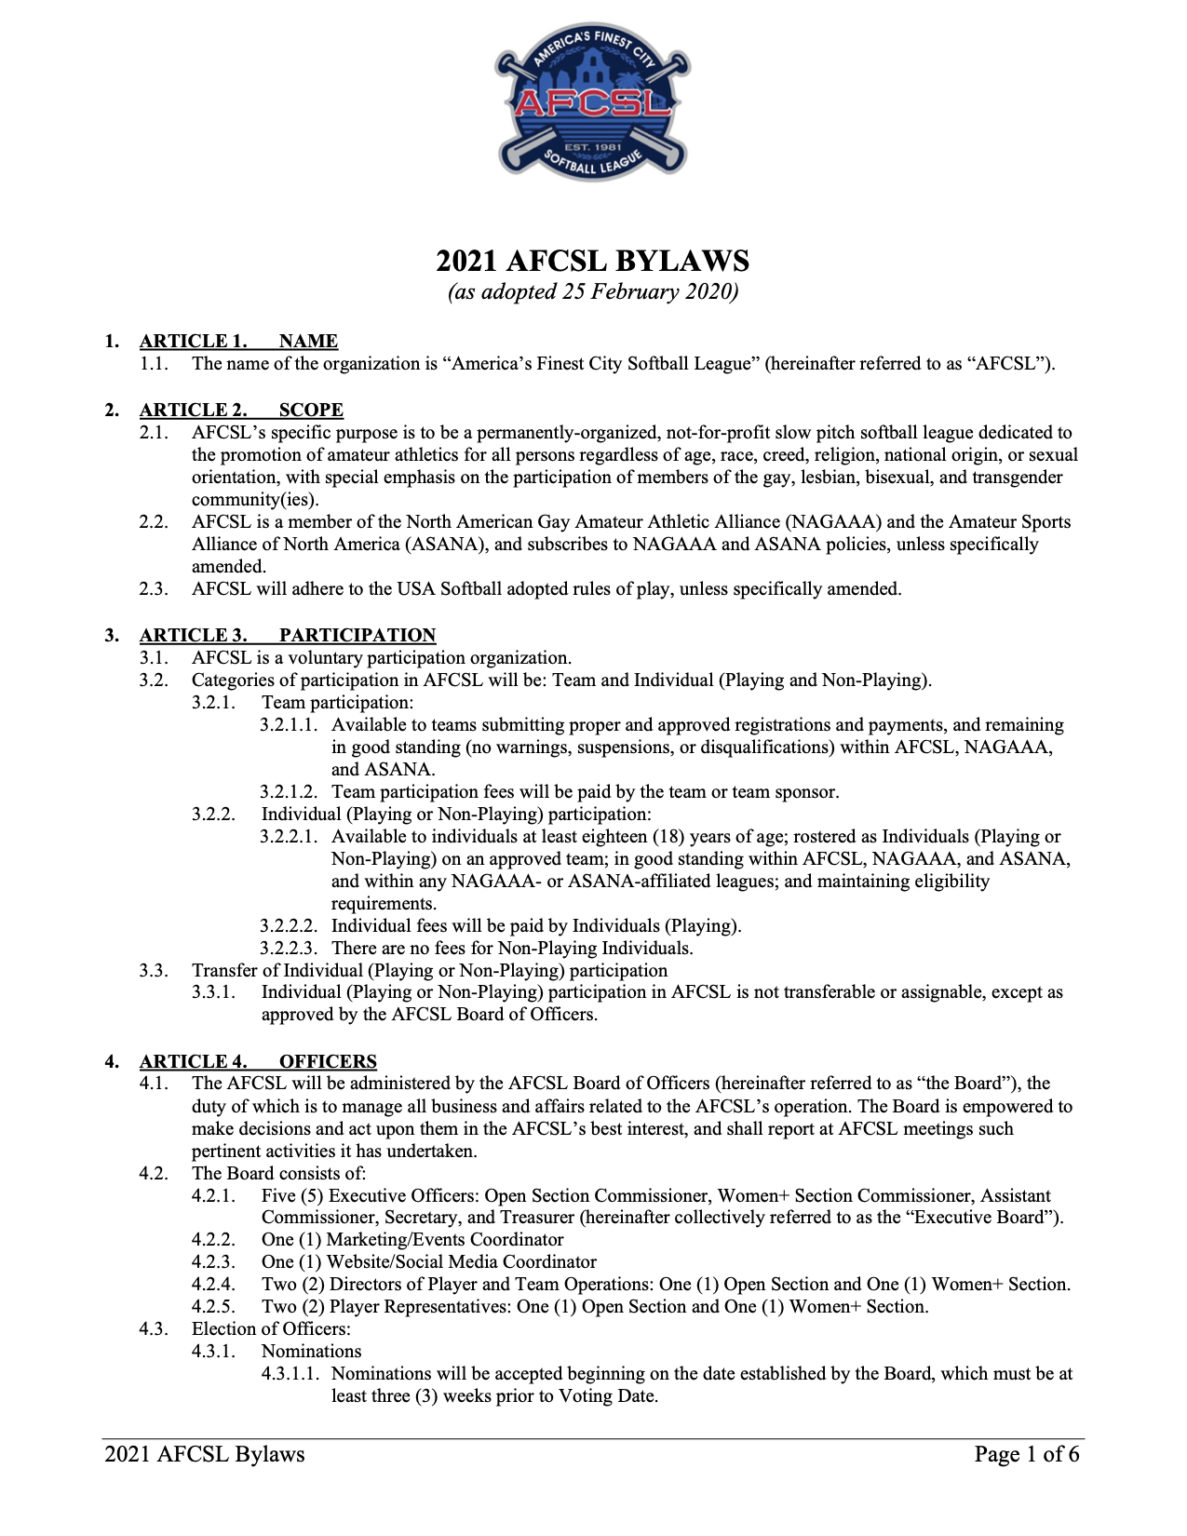 2020-afcsl-bylaws-americas-finest-city-softball-league